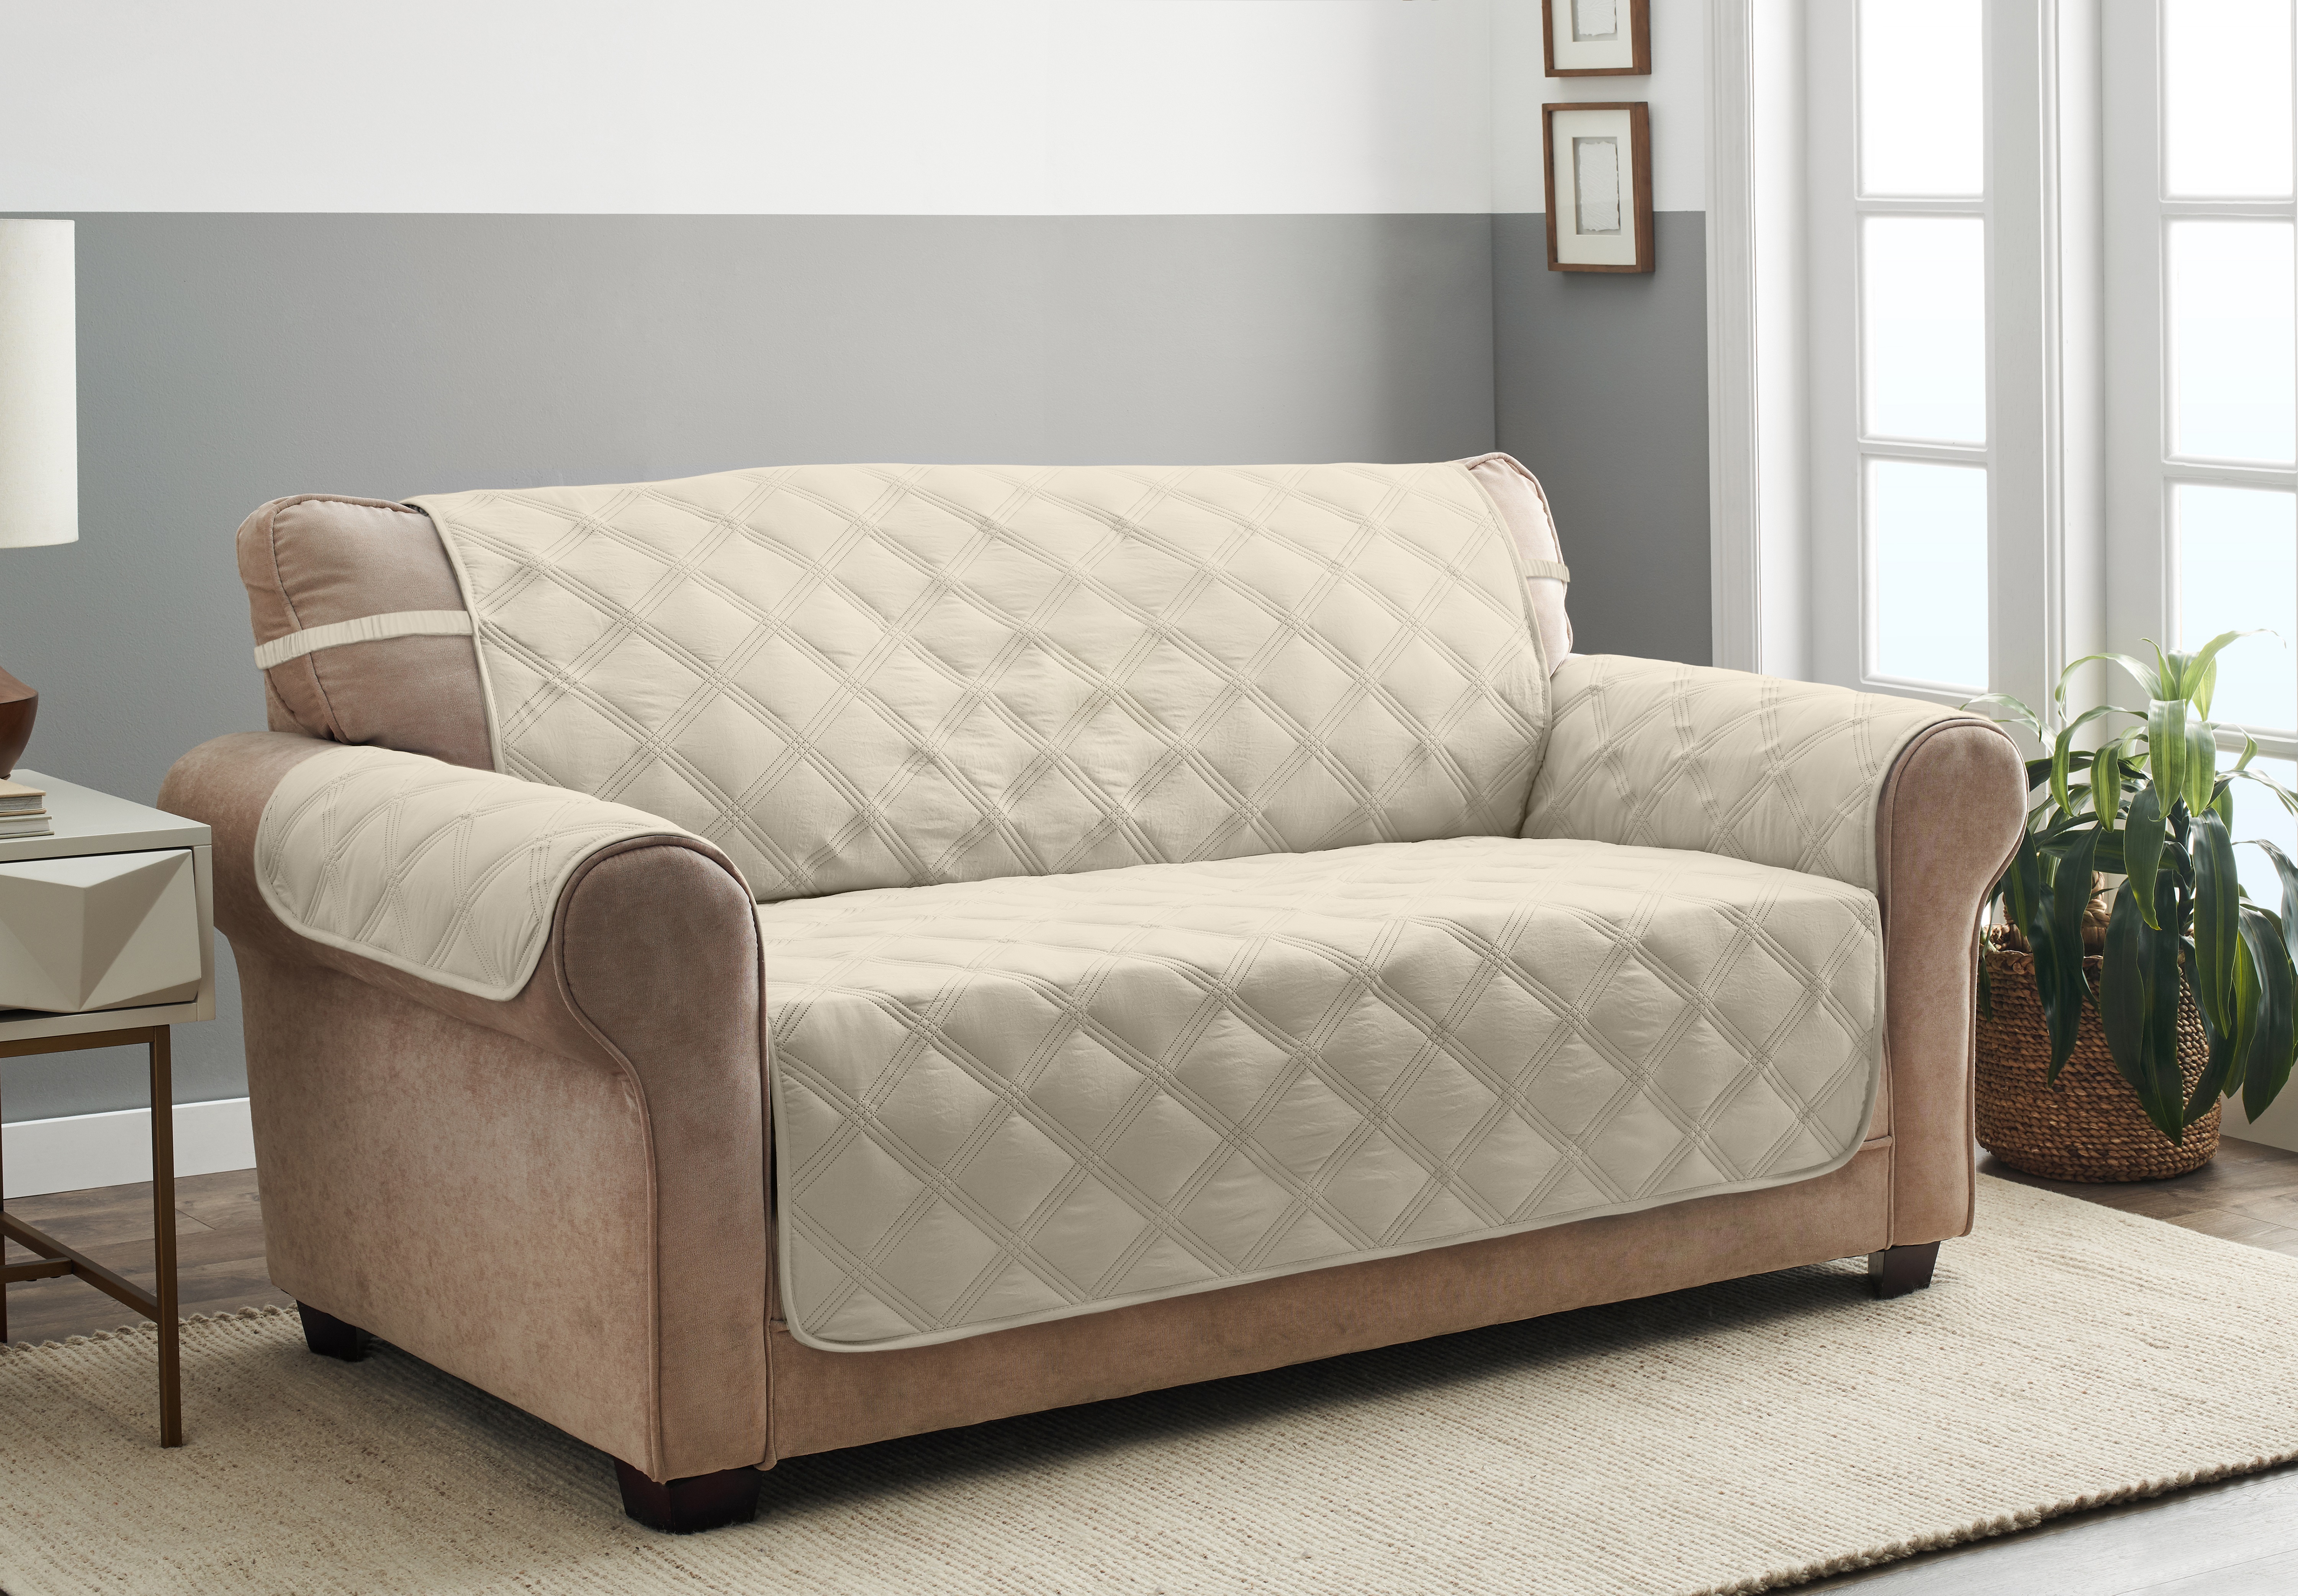 Innovative Textile Solutions 1-piece Hampton Diamond Secure Fit Sofa Furniture Cover, Sand - image 1 of 11